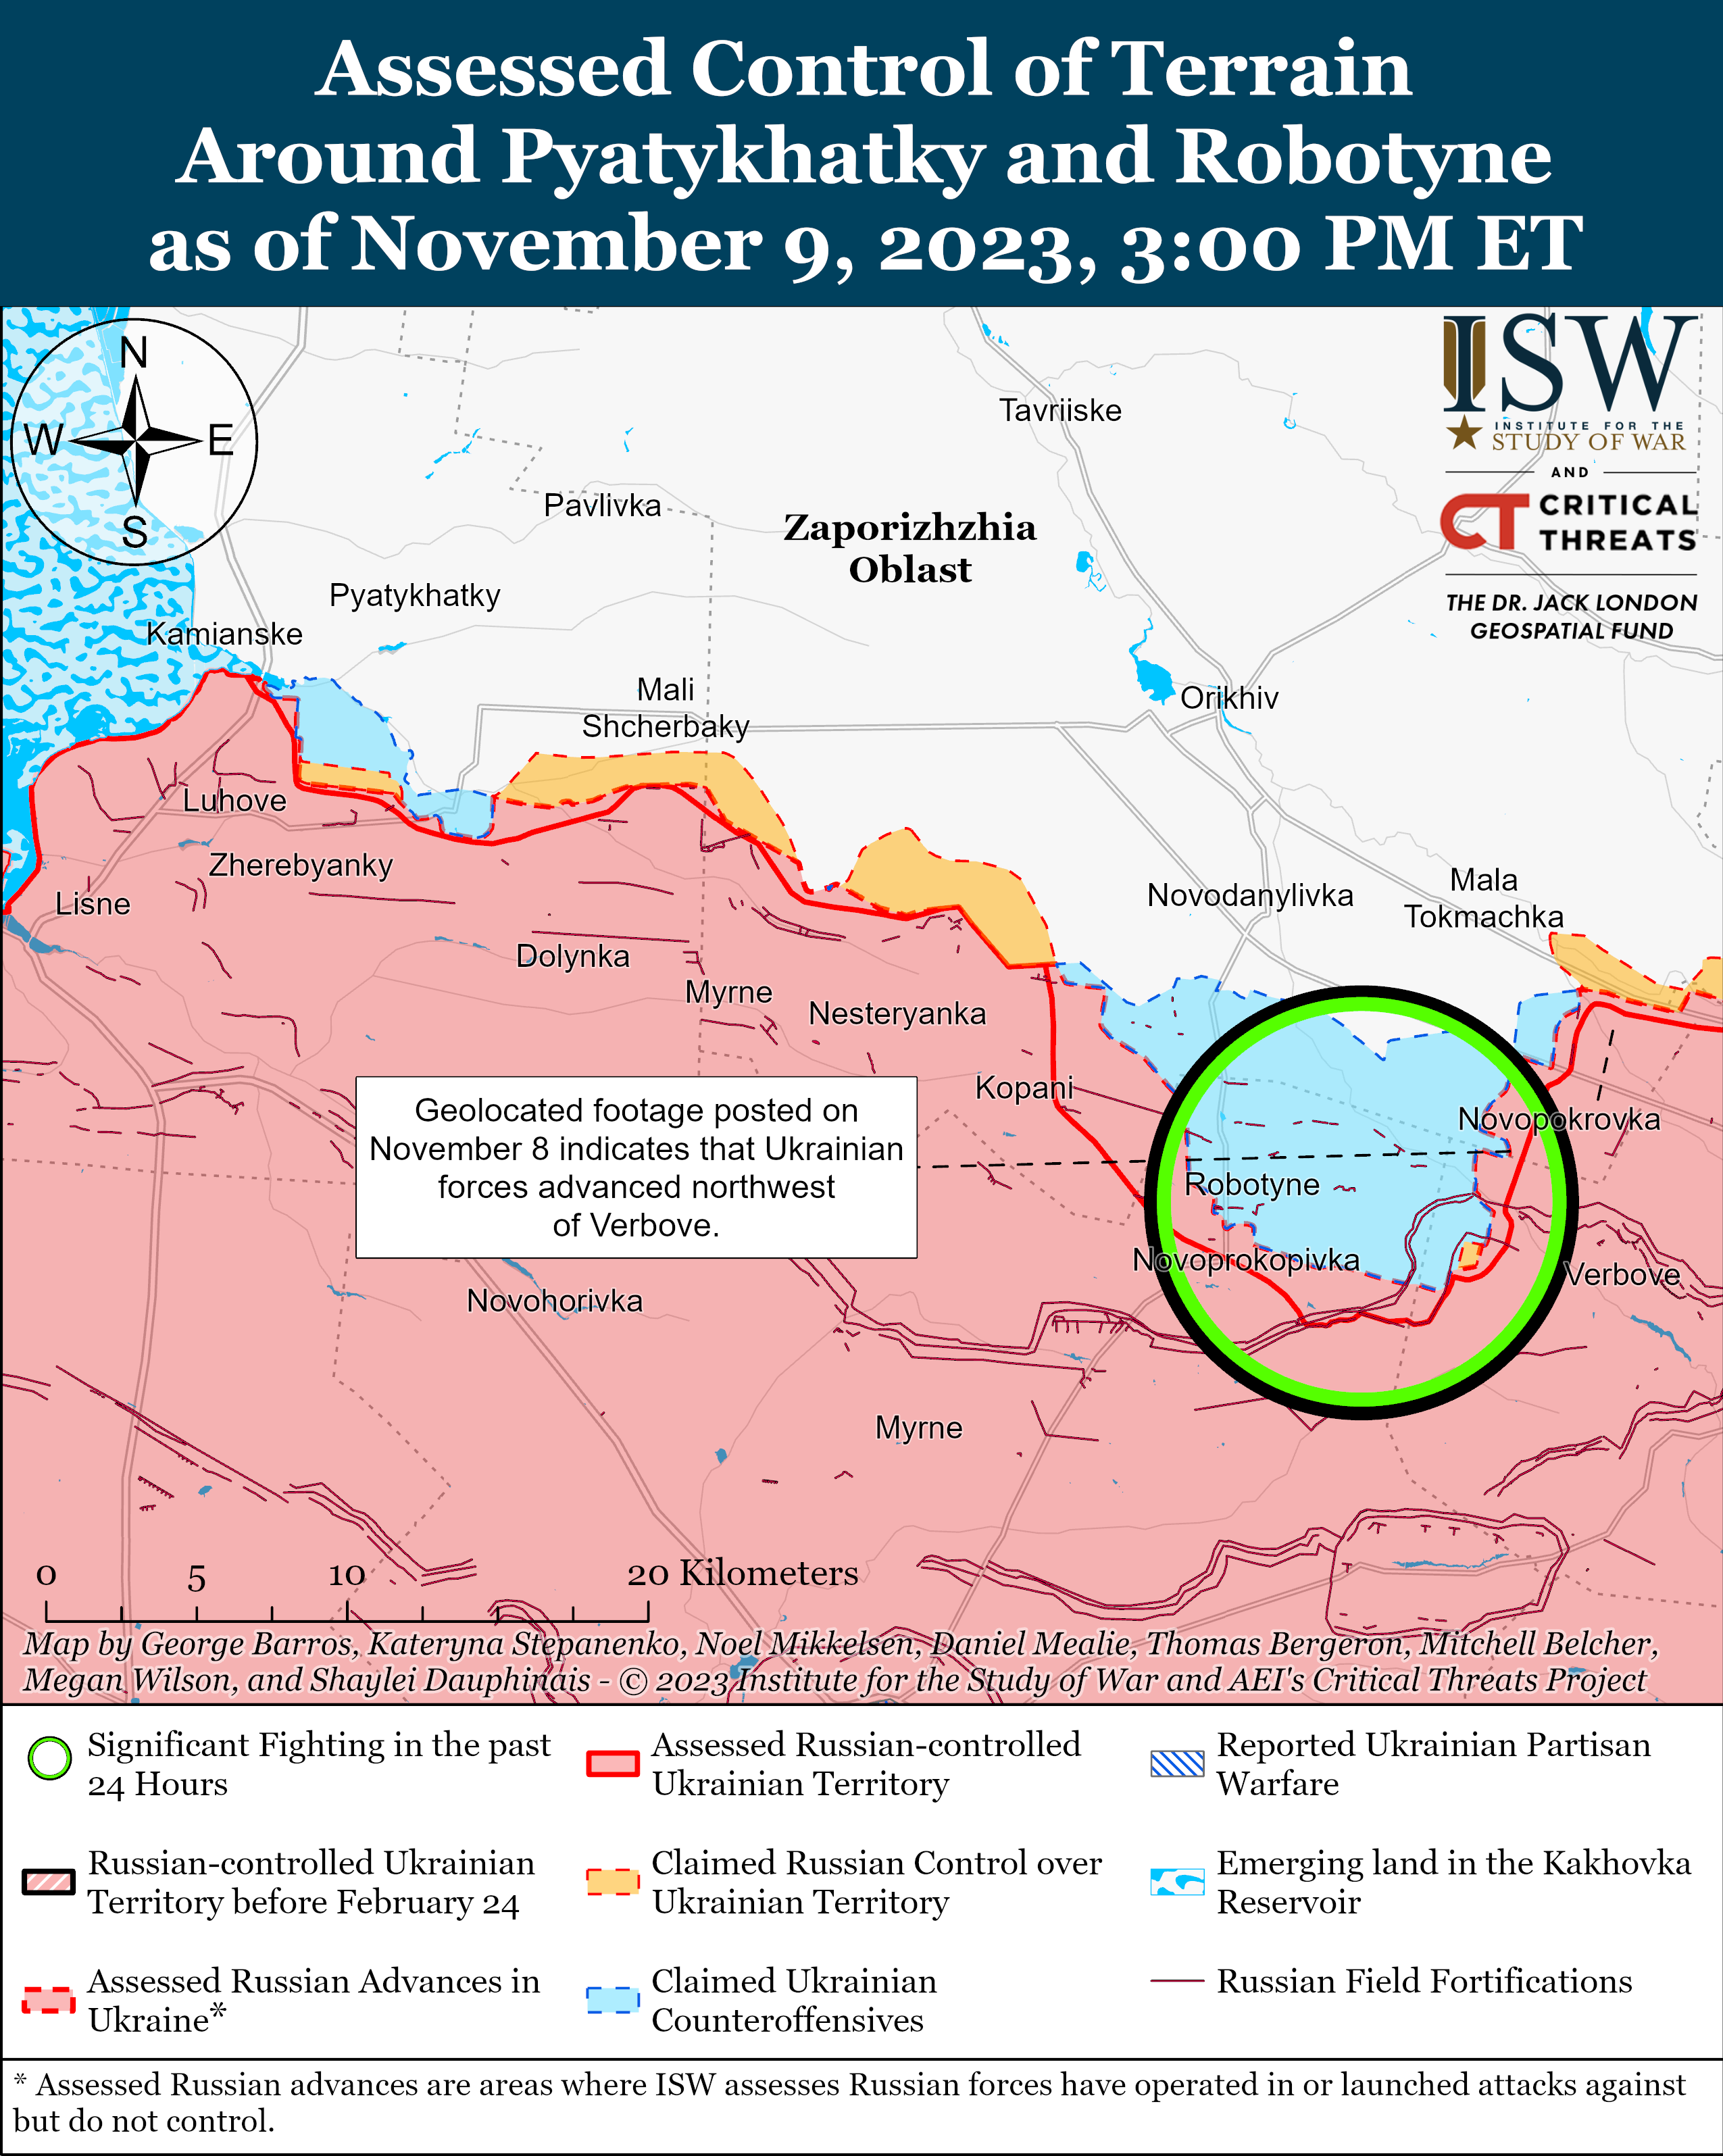 Pryatykhatky_and_Robotyne_Battle_Map_Draft_November_9_2023.png